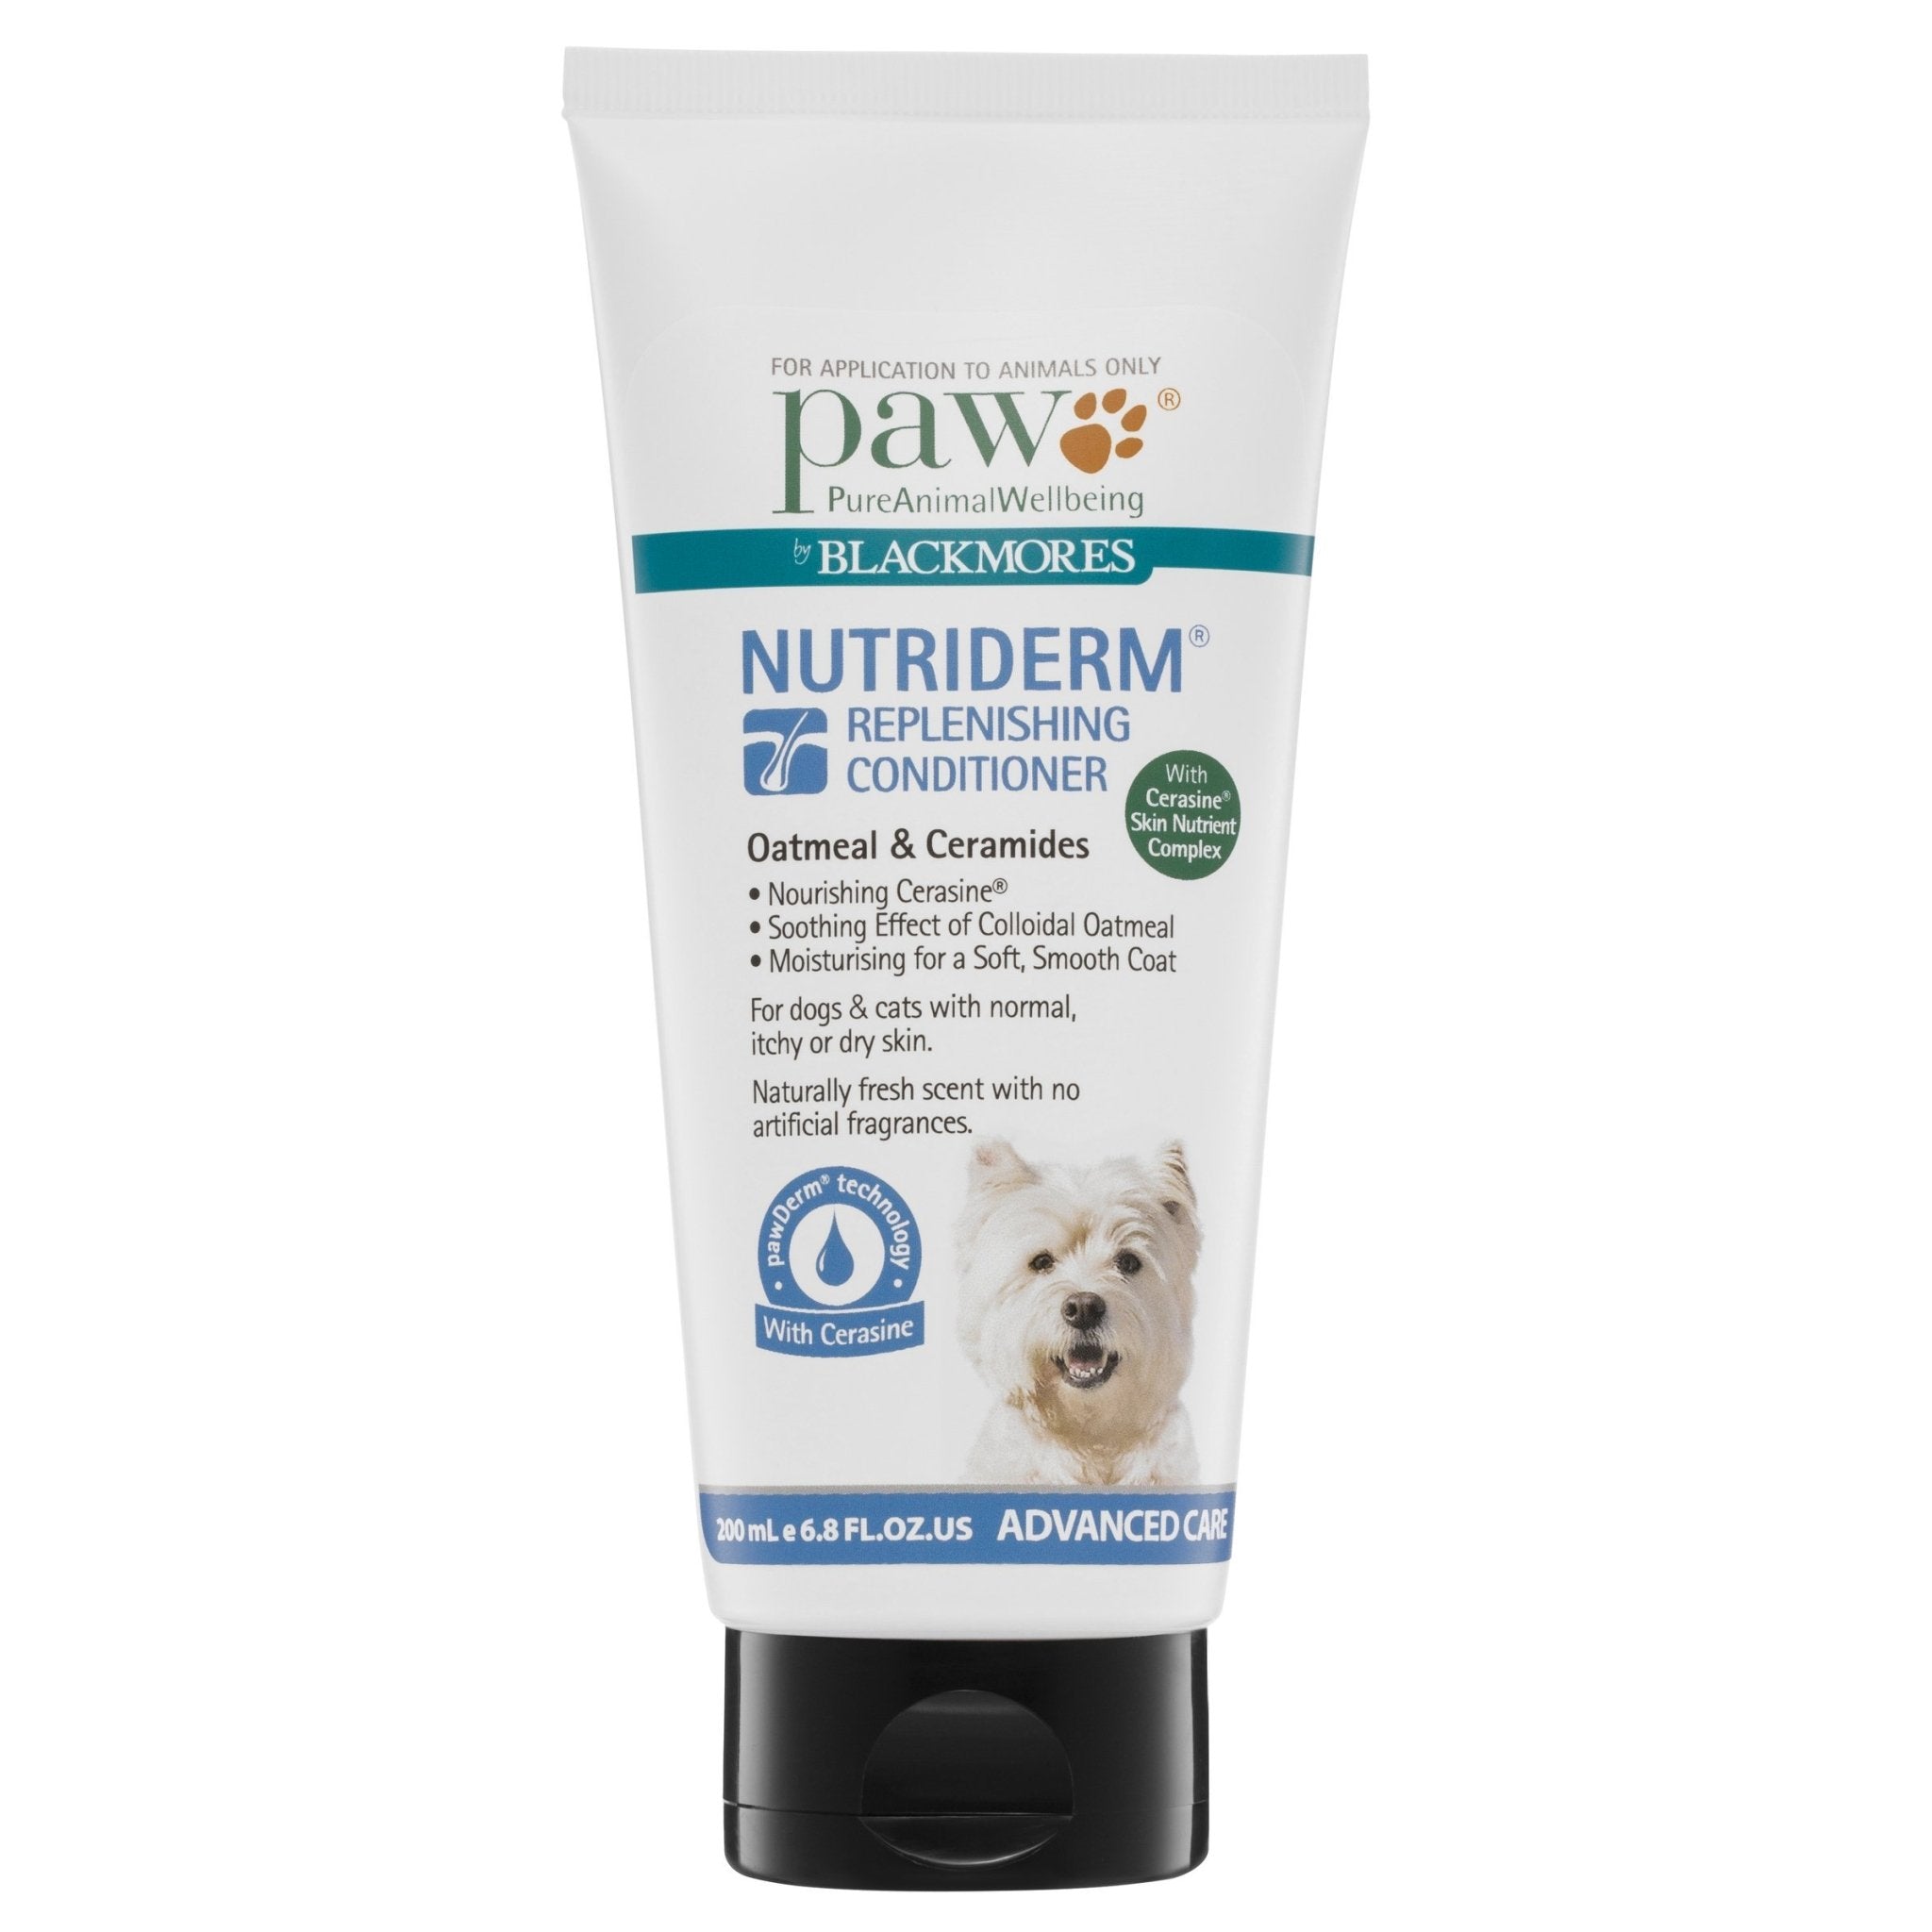 PAW Nutriderm® Replenishing Conditioner